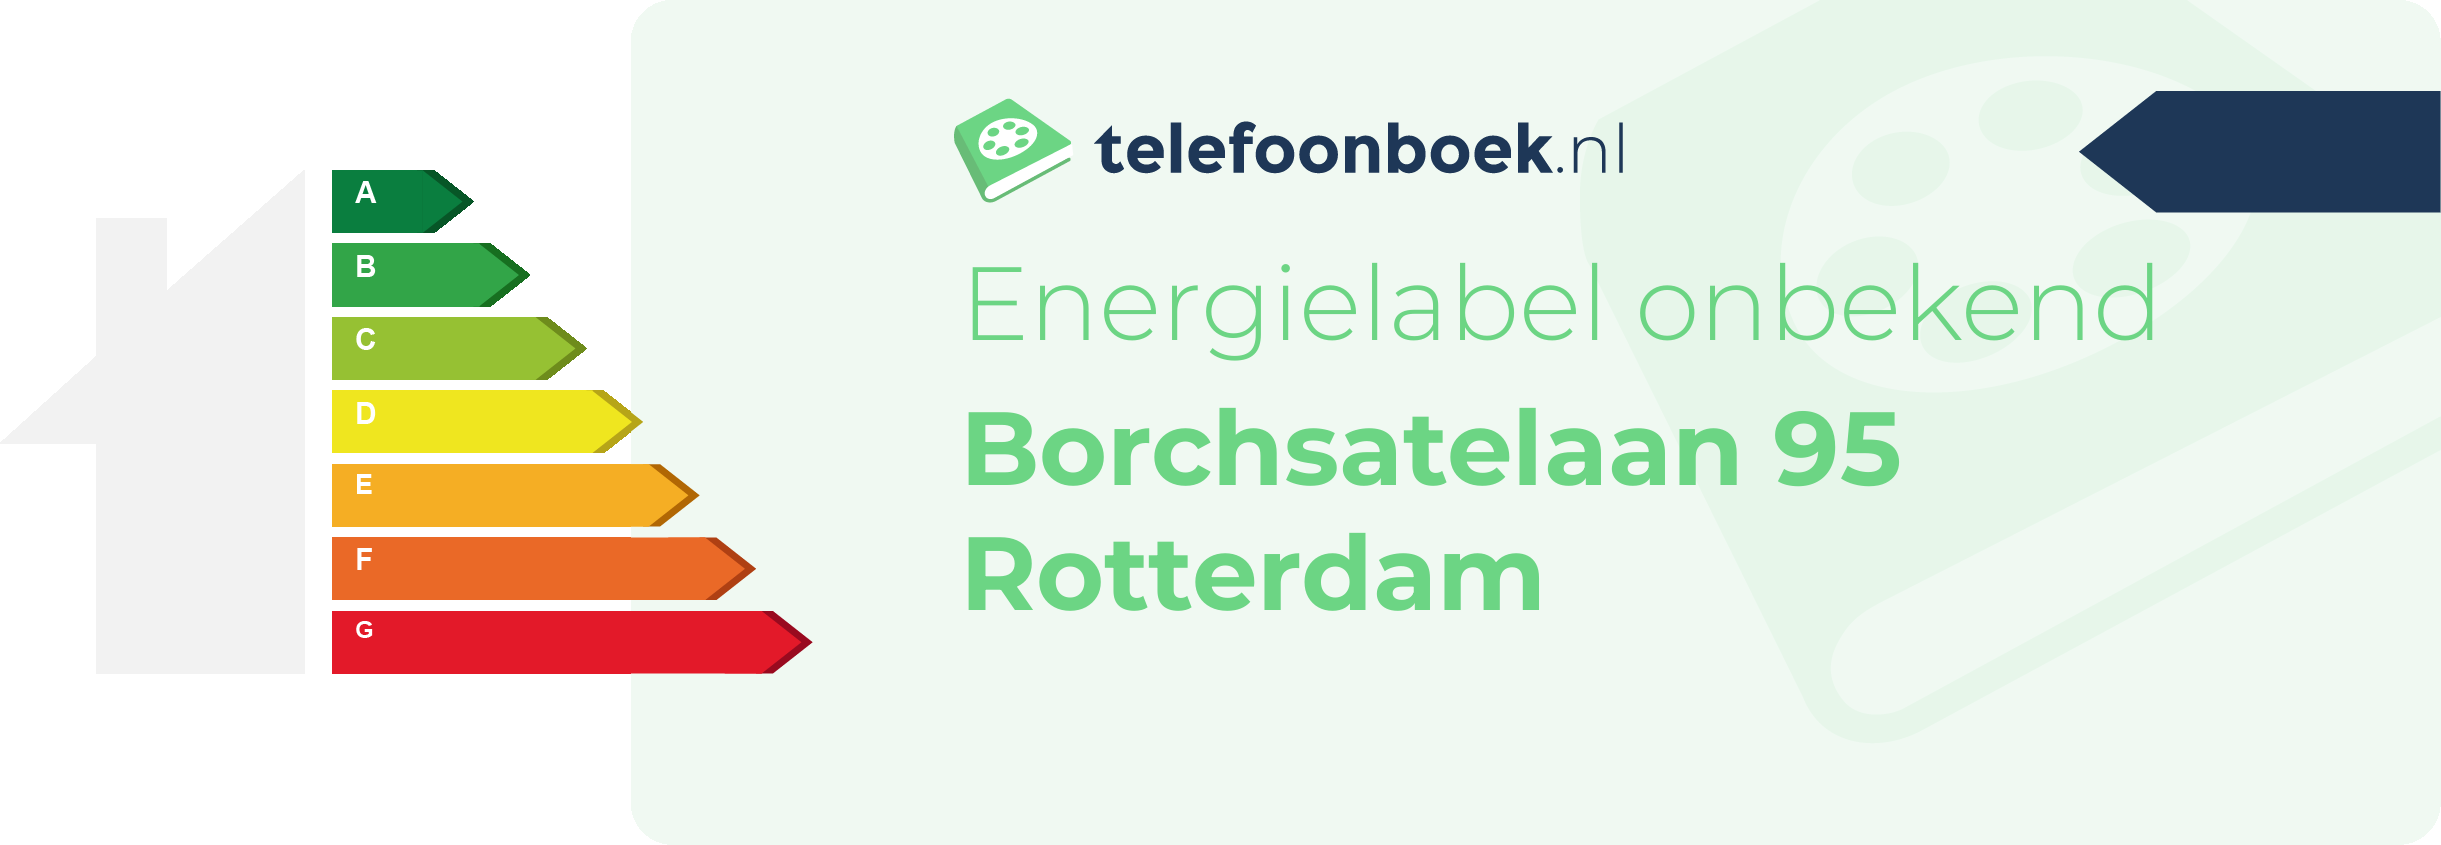 Energielabel Borchsatelaan 95 Rotterdam